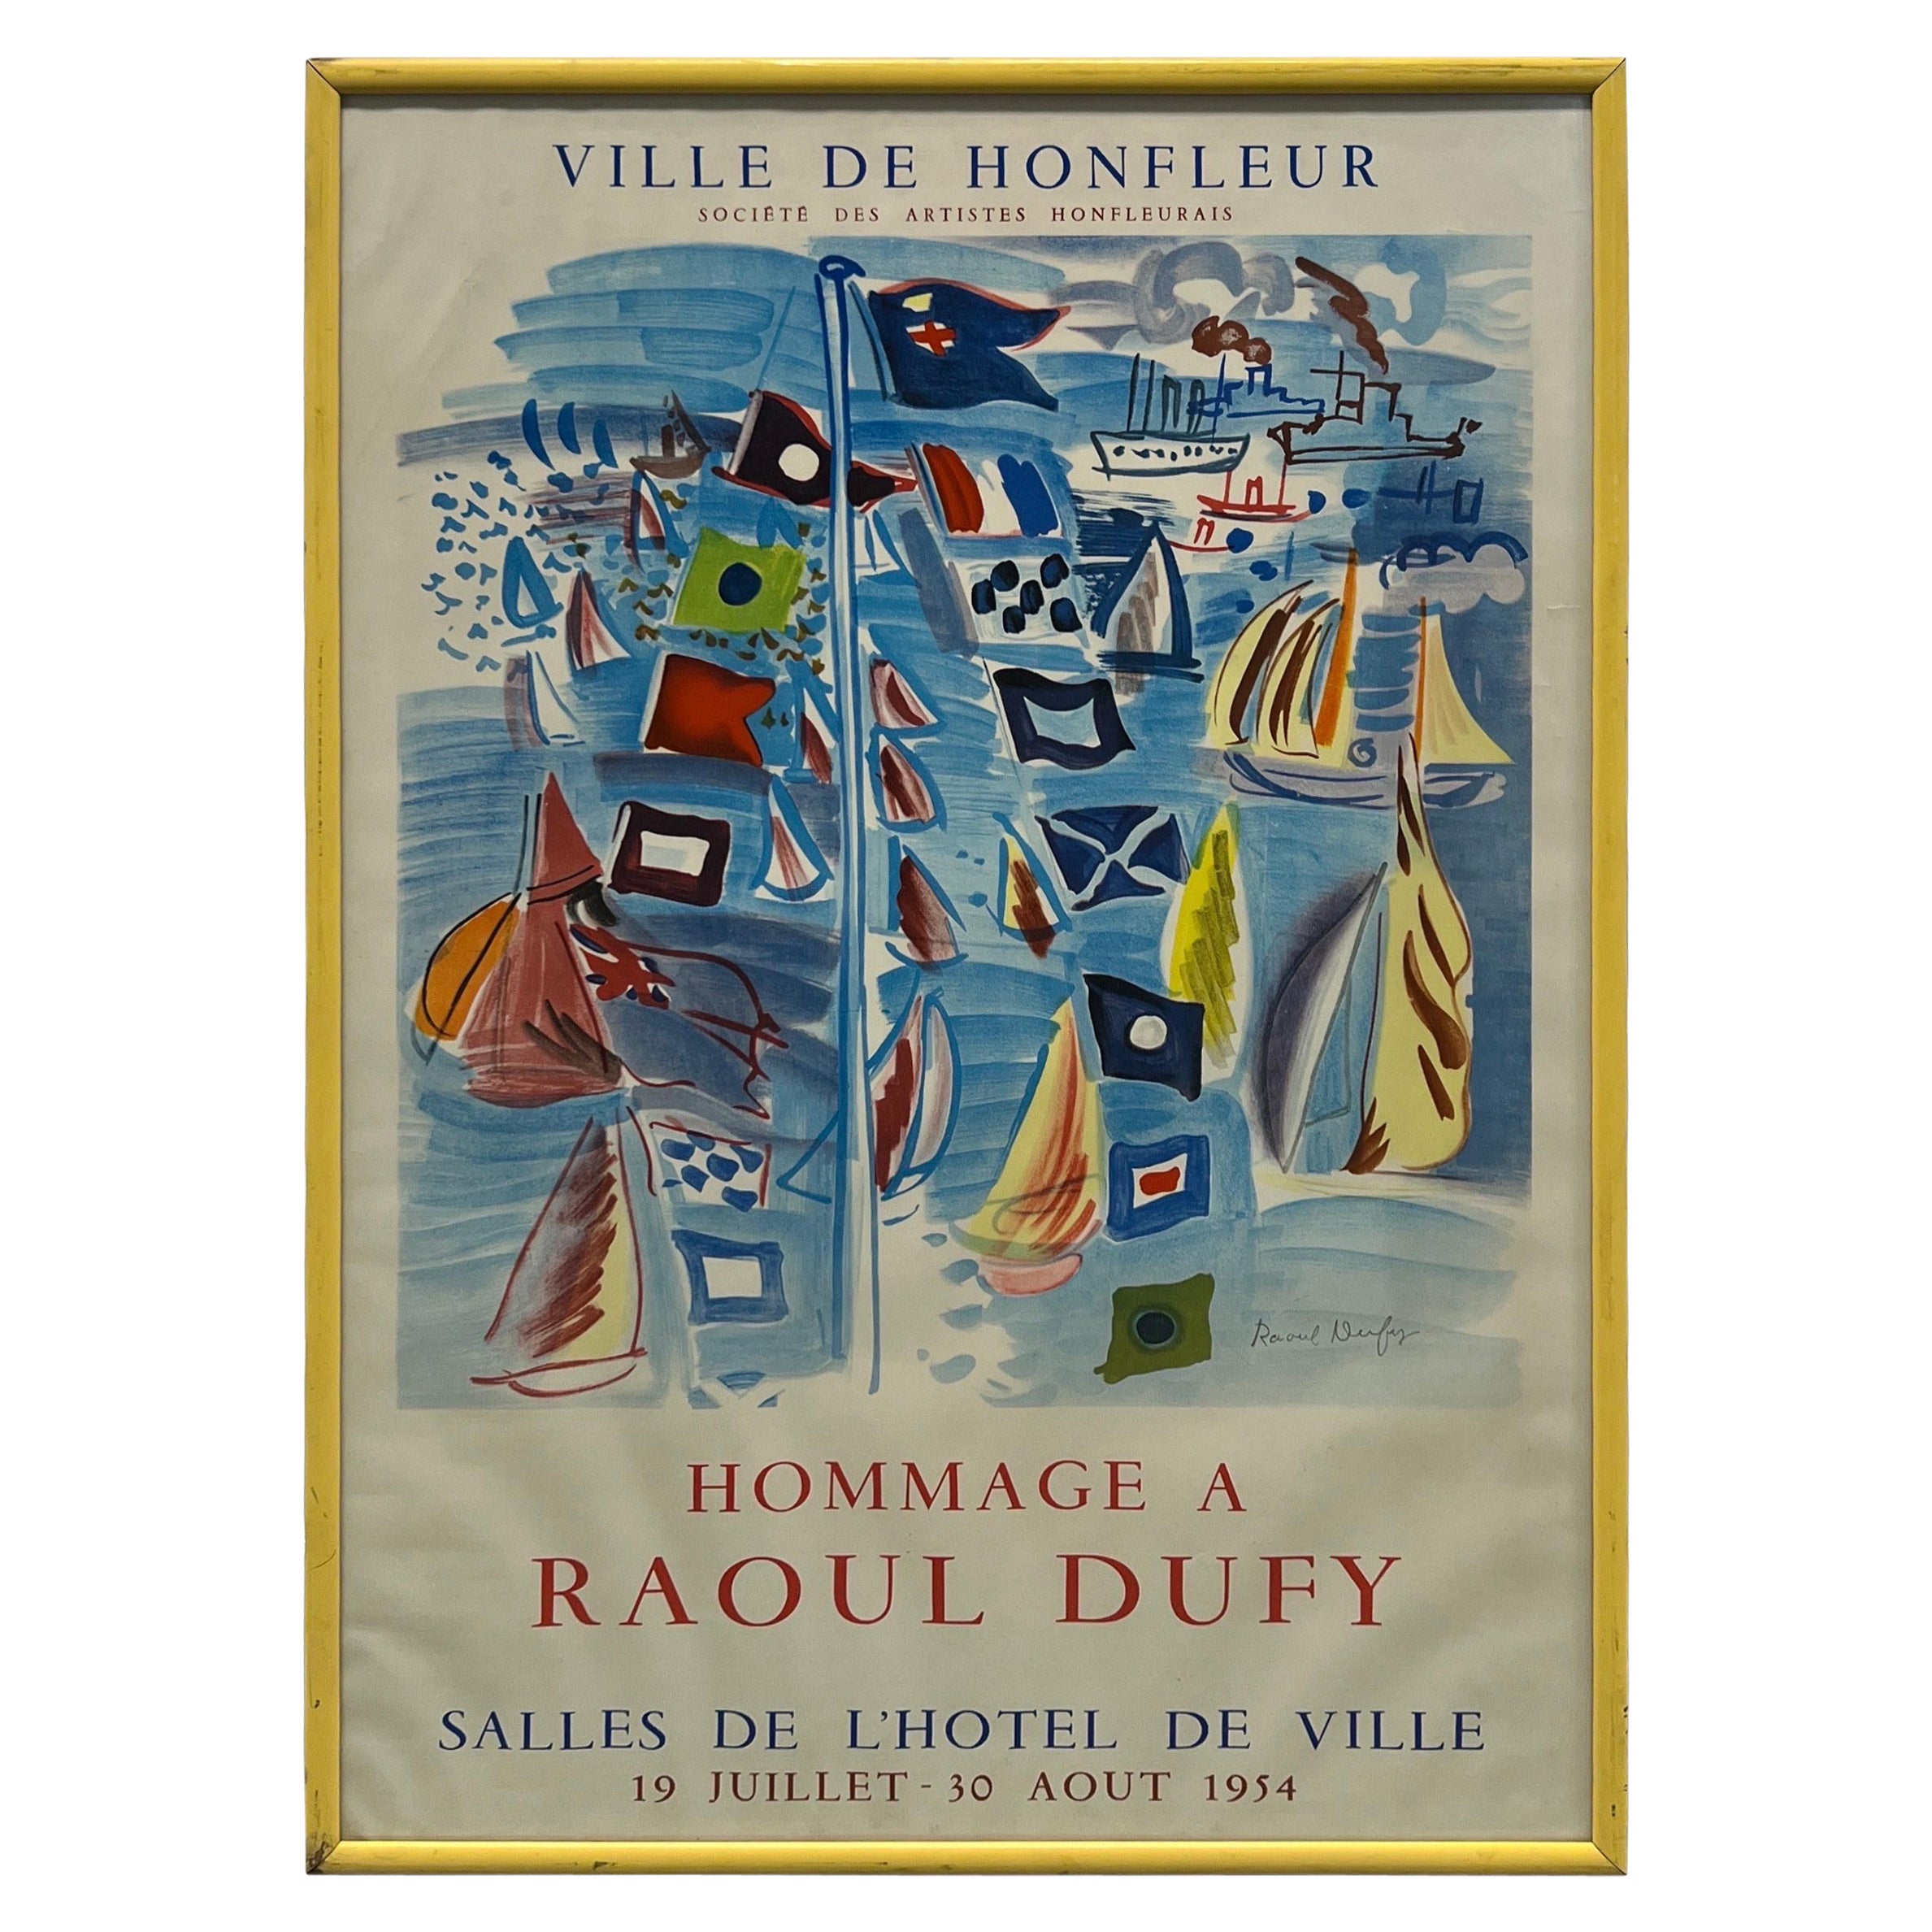 Raoul Dufy Exhibition “Ville de Honfleur Hommage a Raoul Dufy” Circa 1954